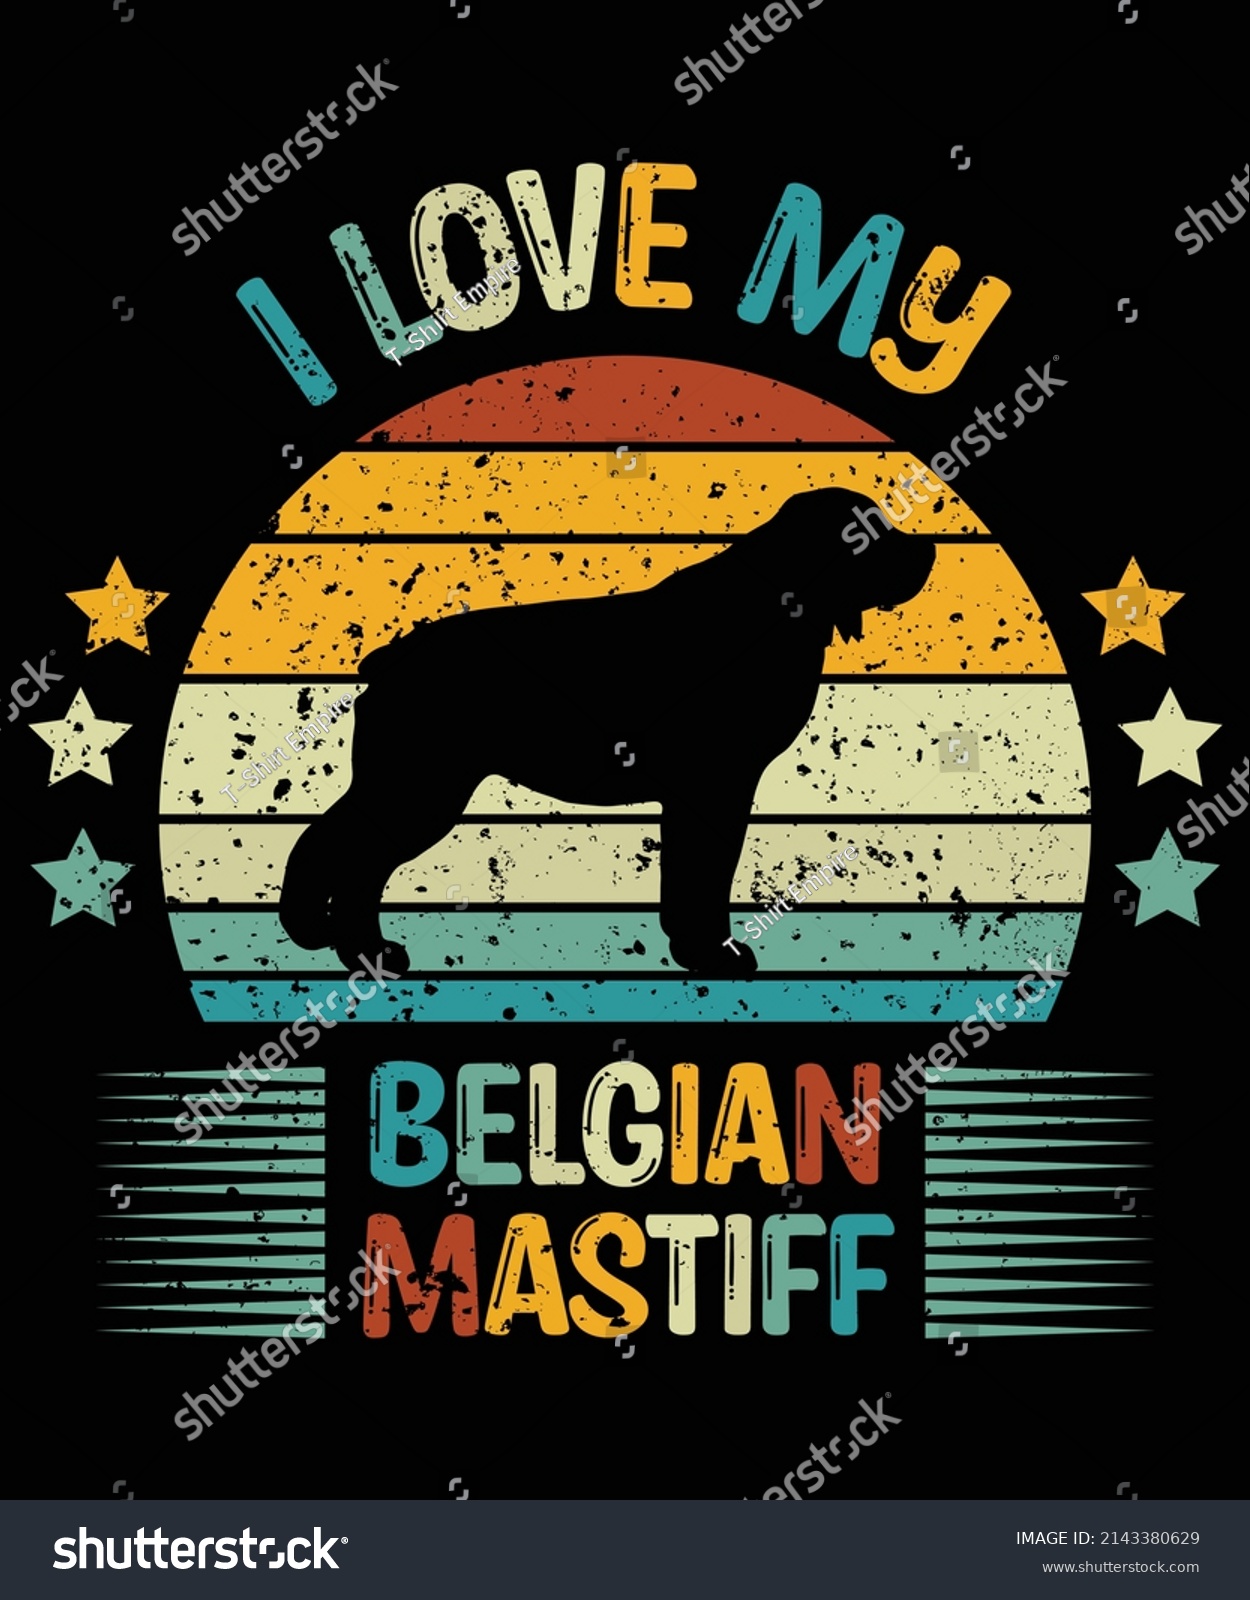 SVG of Belgian Mastiff silhouette vintage and retro t-shirt design svg